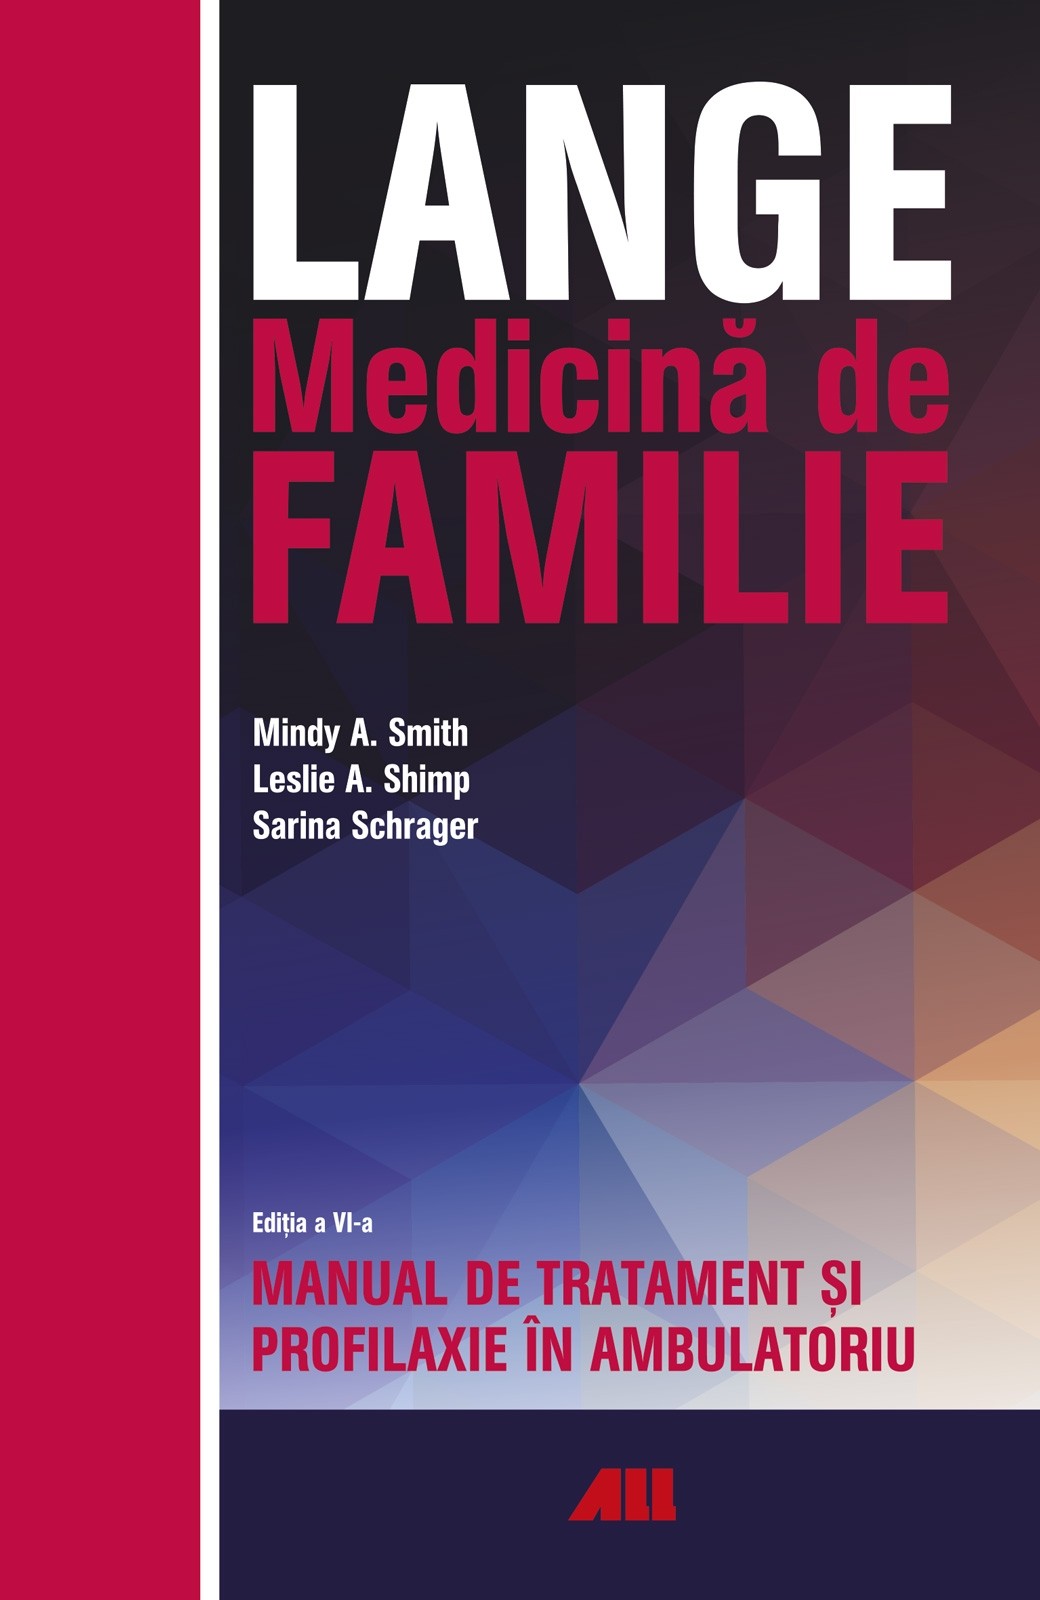 LANGE. Medicina de familie | Leslie A. Shimp, Mindy A. Smith, Sarina Schrager ALL 2022